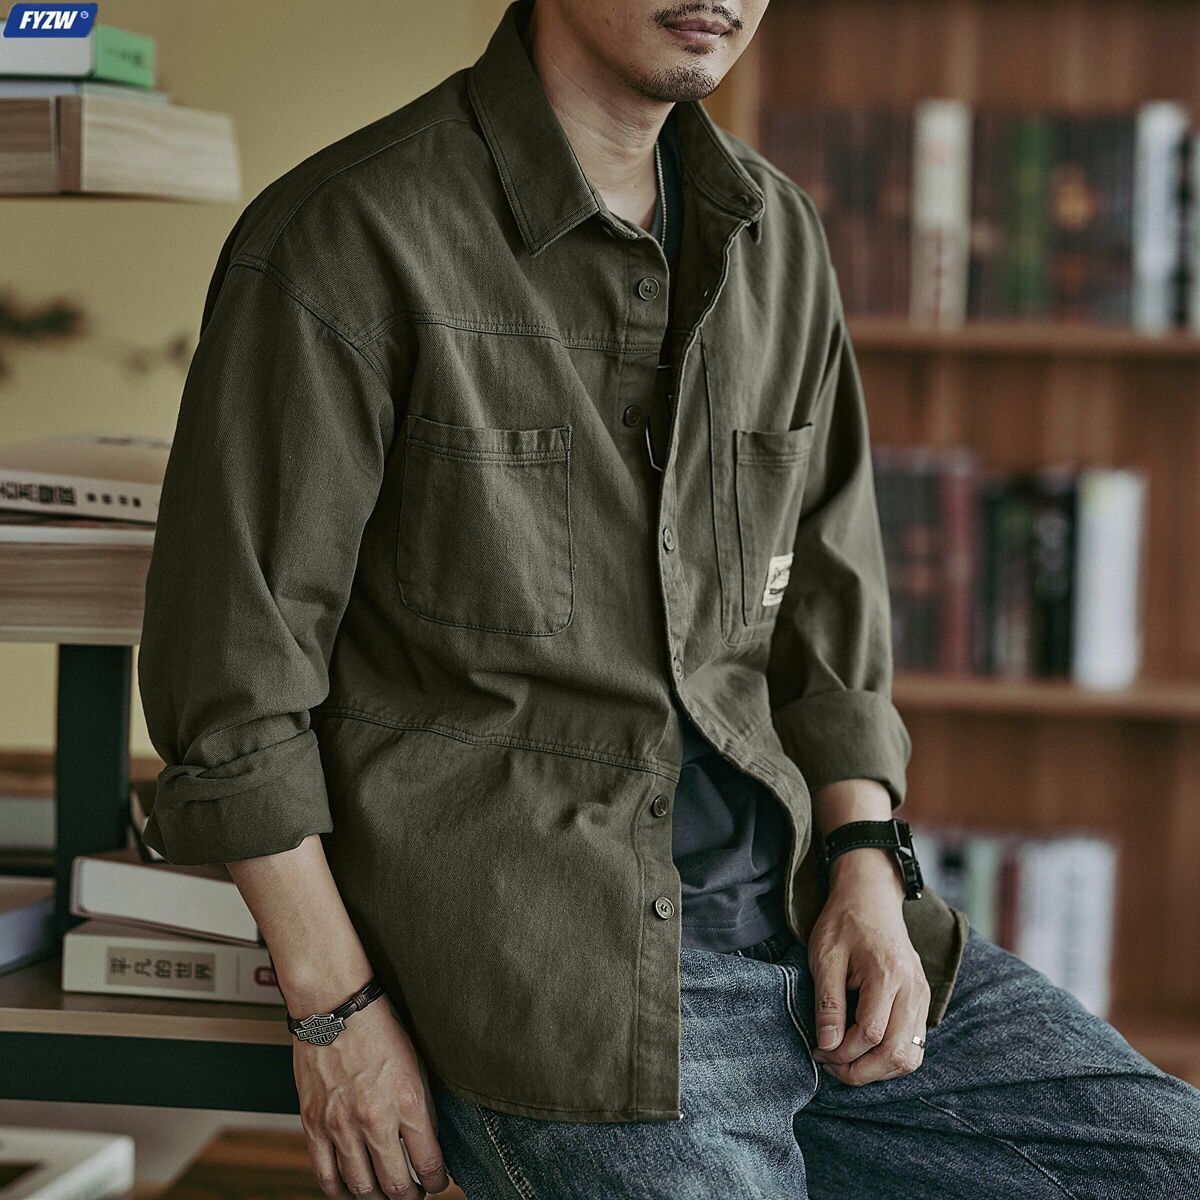 FYZW/Fang Yazhi Wang 100% Cotton Retro Tooling Shirt Men's Long-sleeved Jacket Spring and Autumn Outer Wear Shirt Fashion